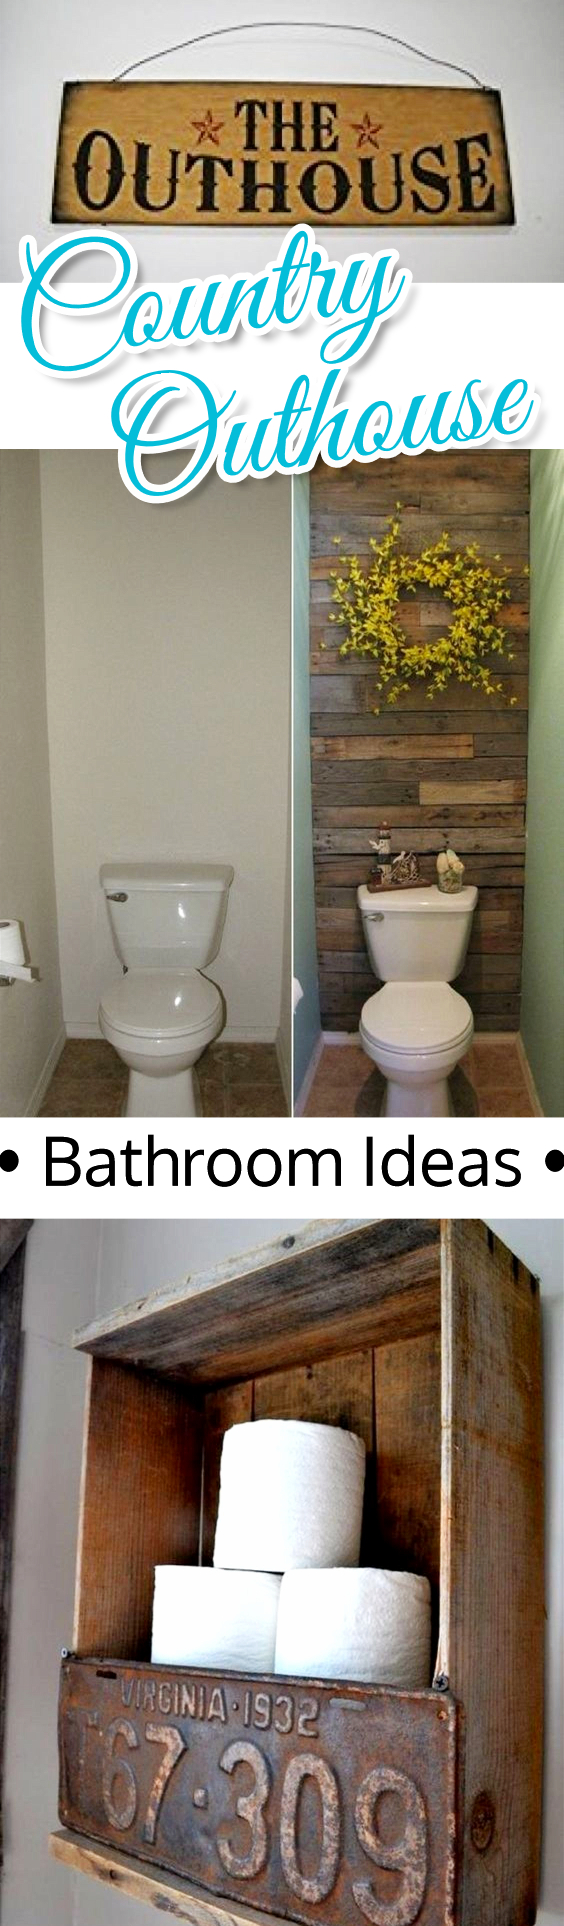 Country Outhouse Bathroom Decor Ideas - fun idea for a small bathroom